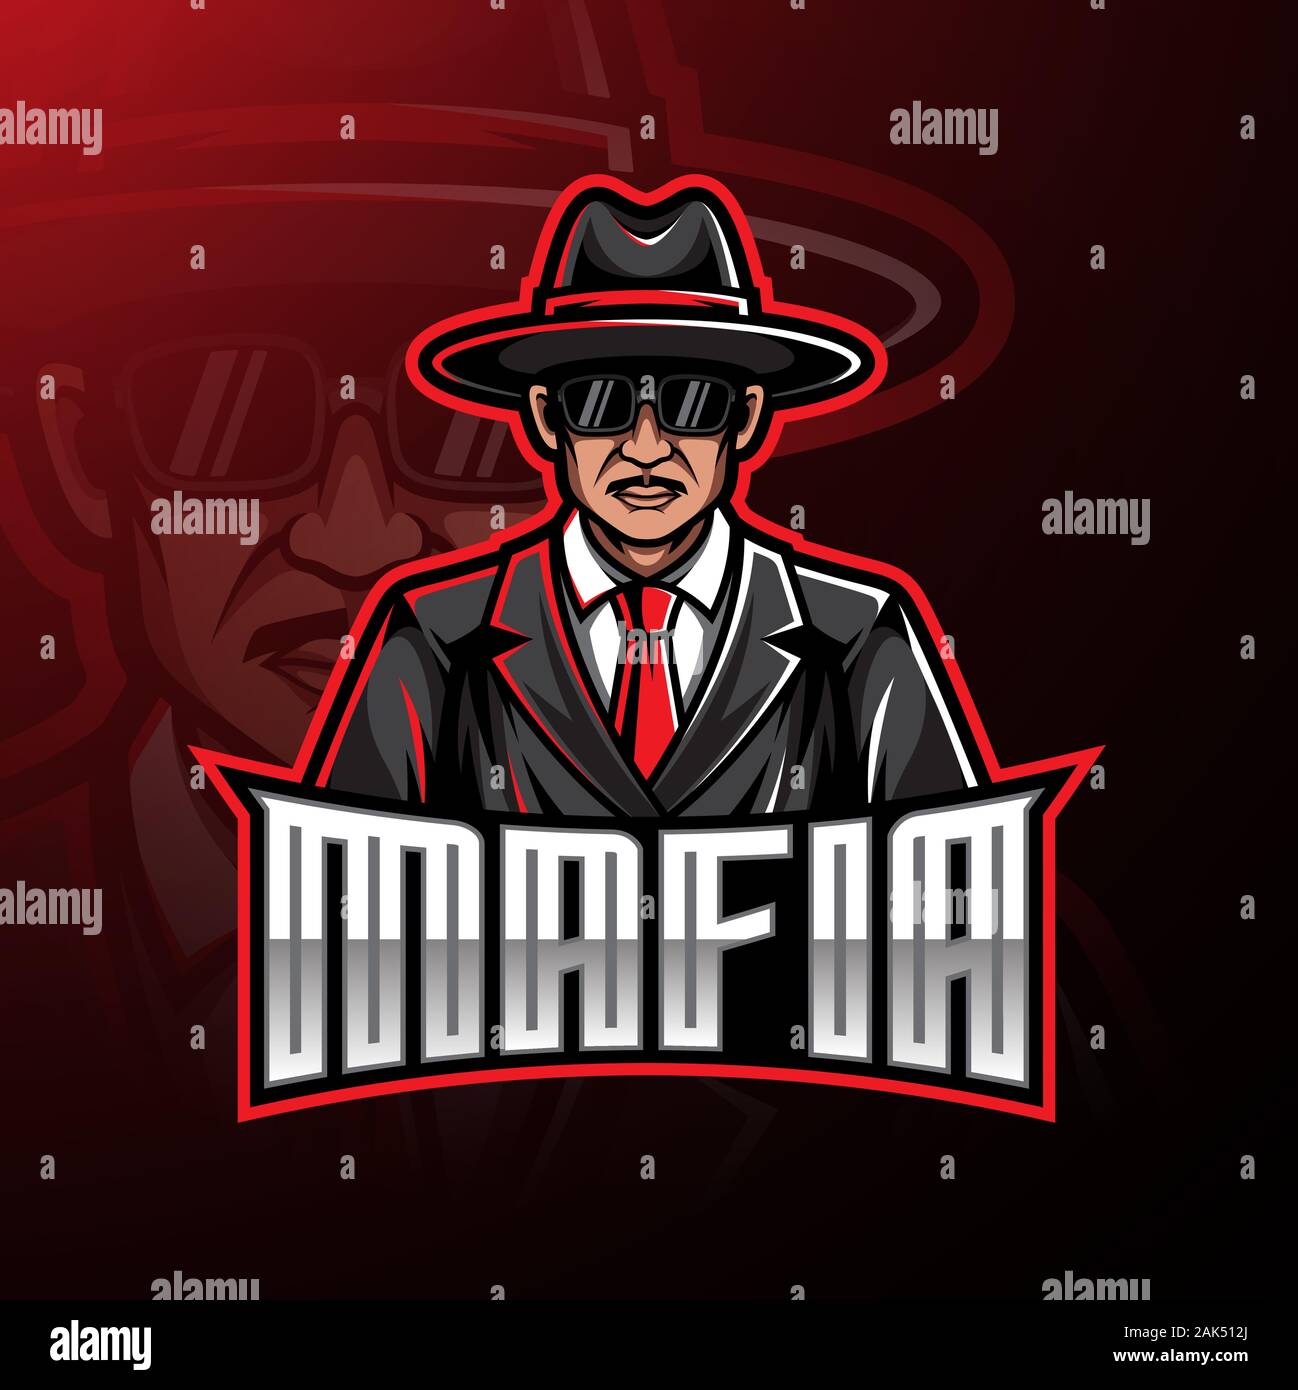 Mafia Team - Mascot & Esport Logo  Game logo design, Team logo design,  Photo logo design